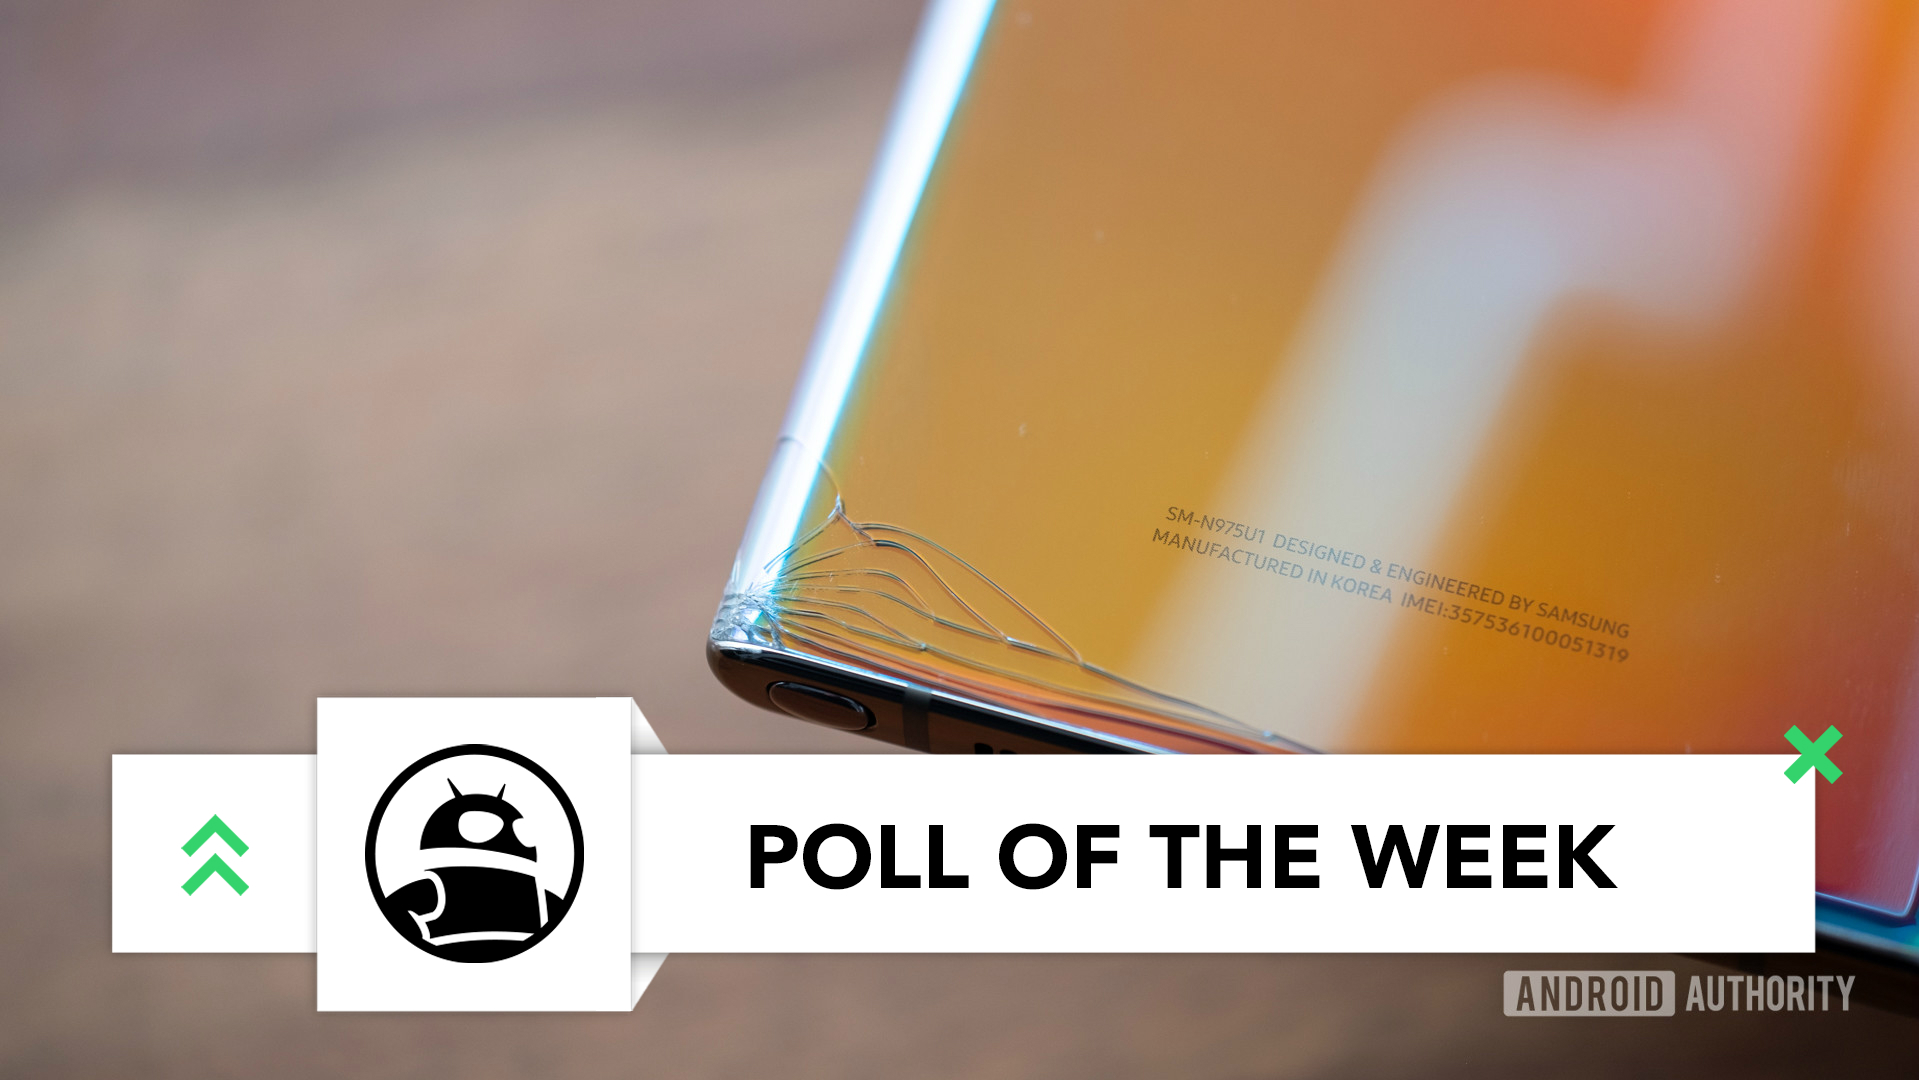 Samsung Galaxy Note 10 Plus back corner crack poll of the week